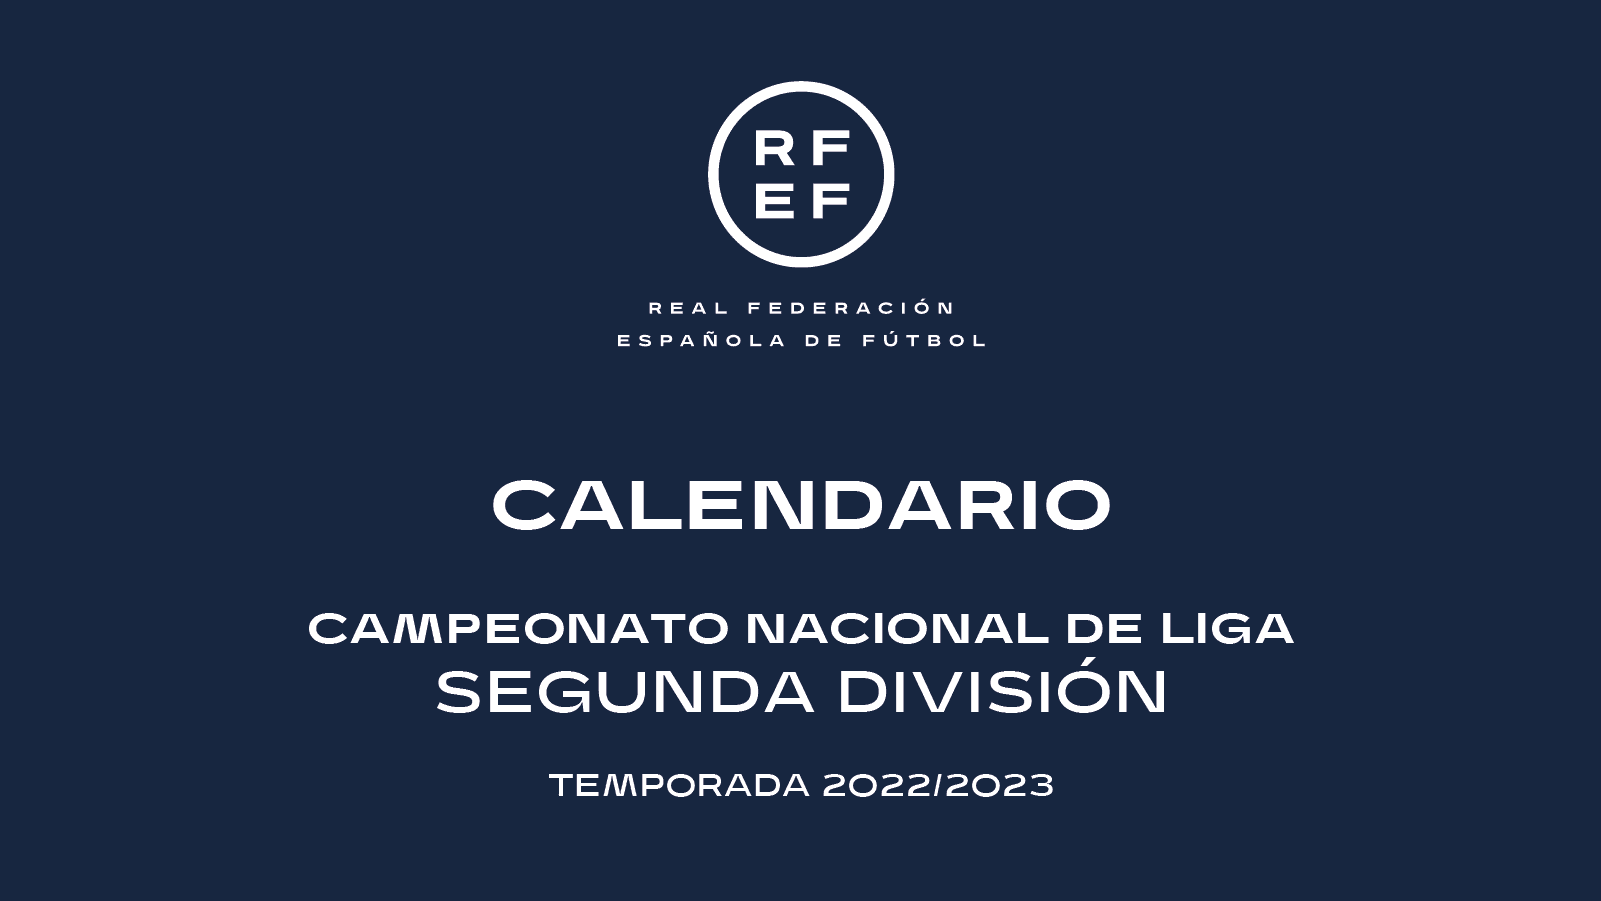 Calendario completo de Divisón partidos, jornadas, horarios y resultados | Goal.com Espana